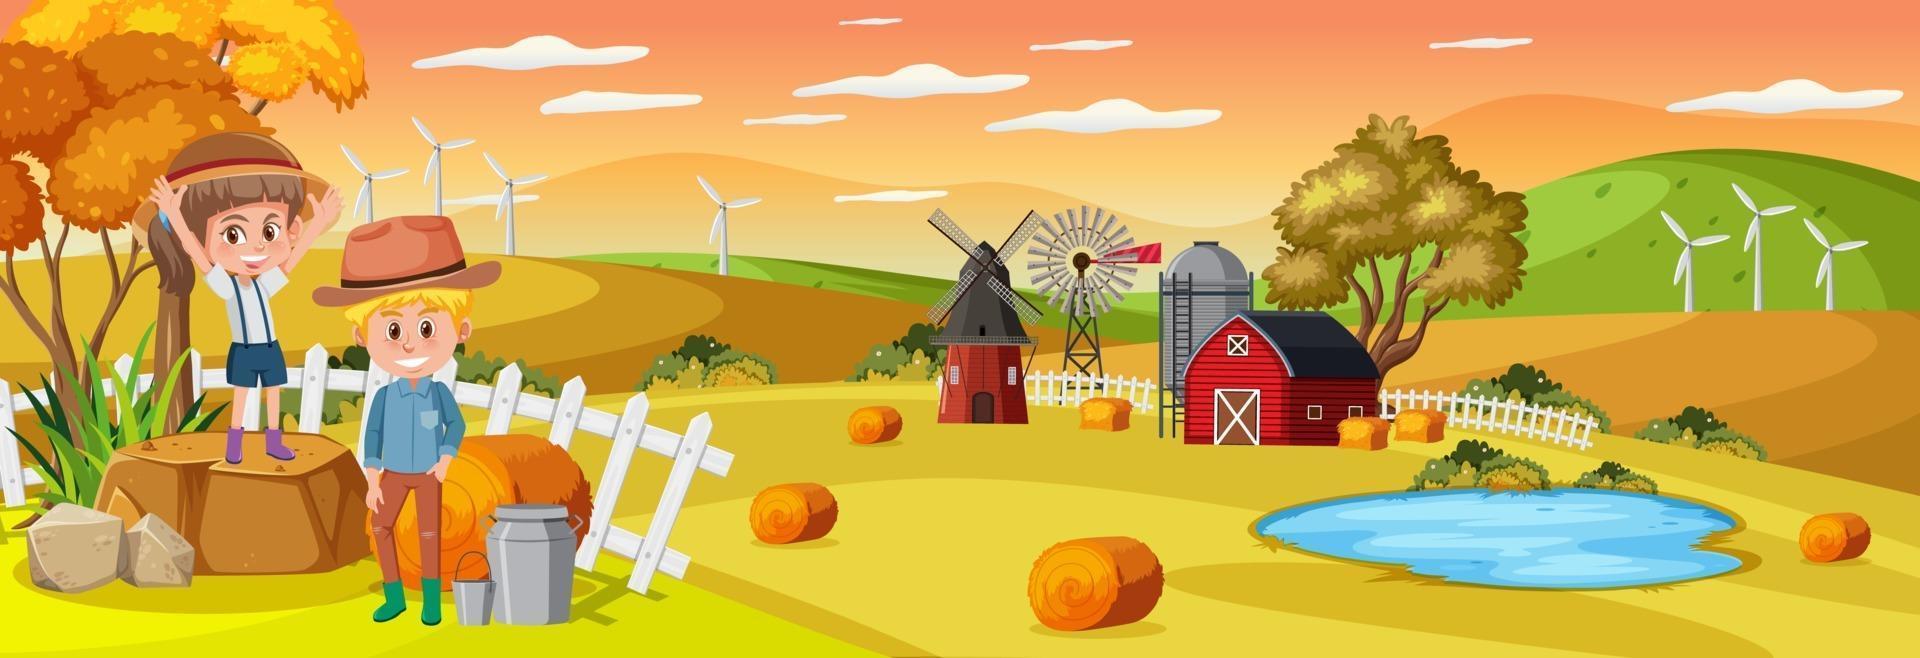 Farm horizontal landscape scene with children cartoon character vector